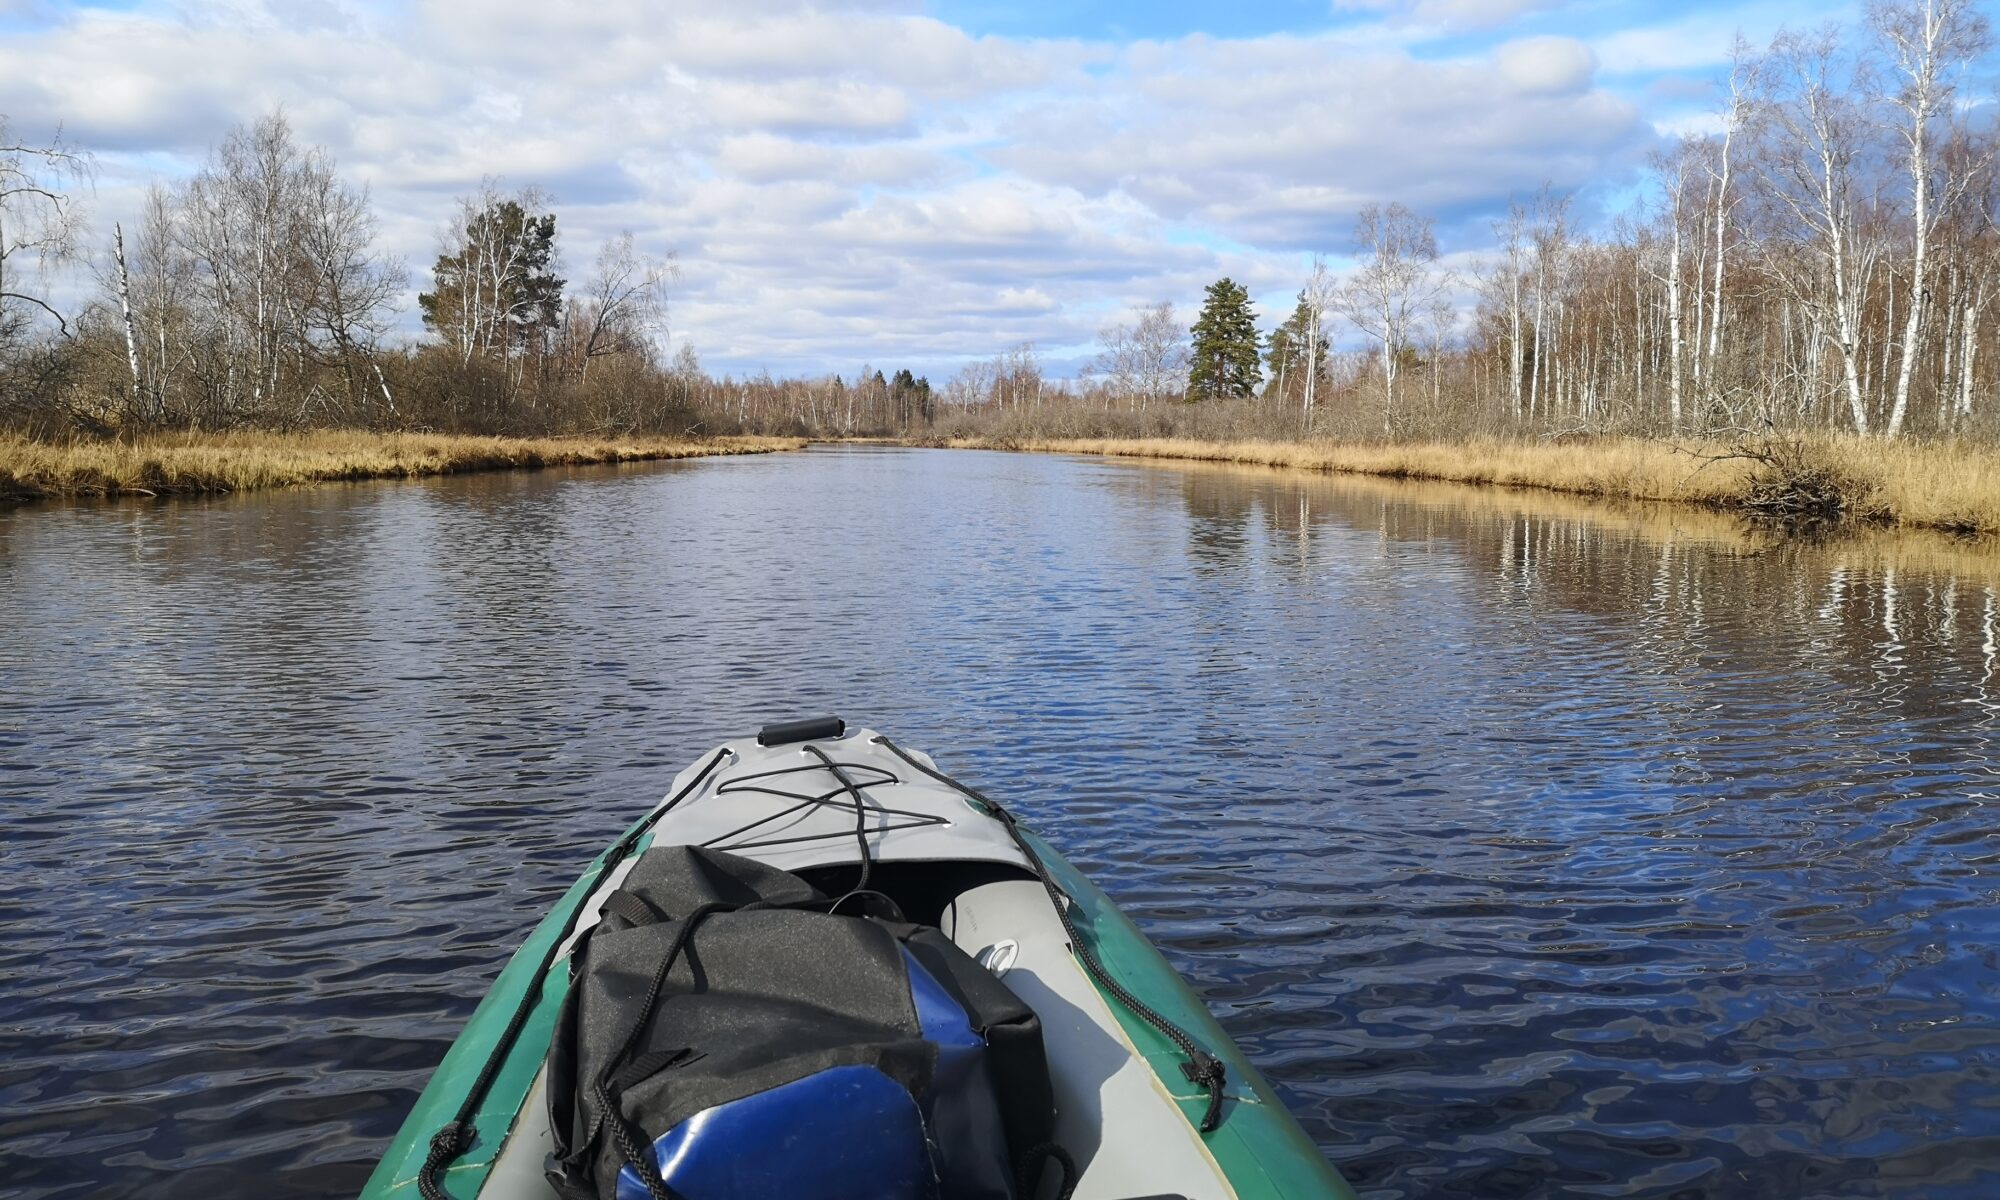 Canoeing along Svartån